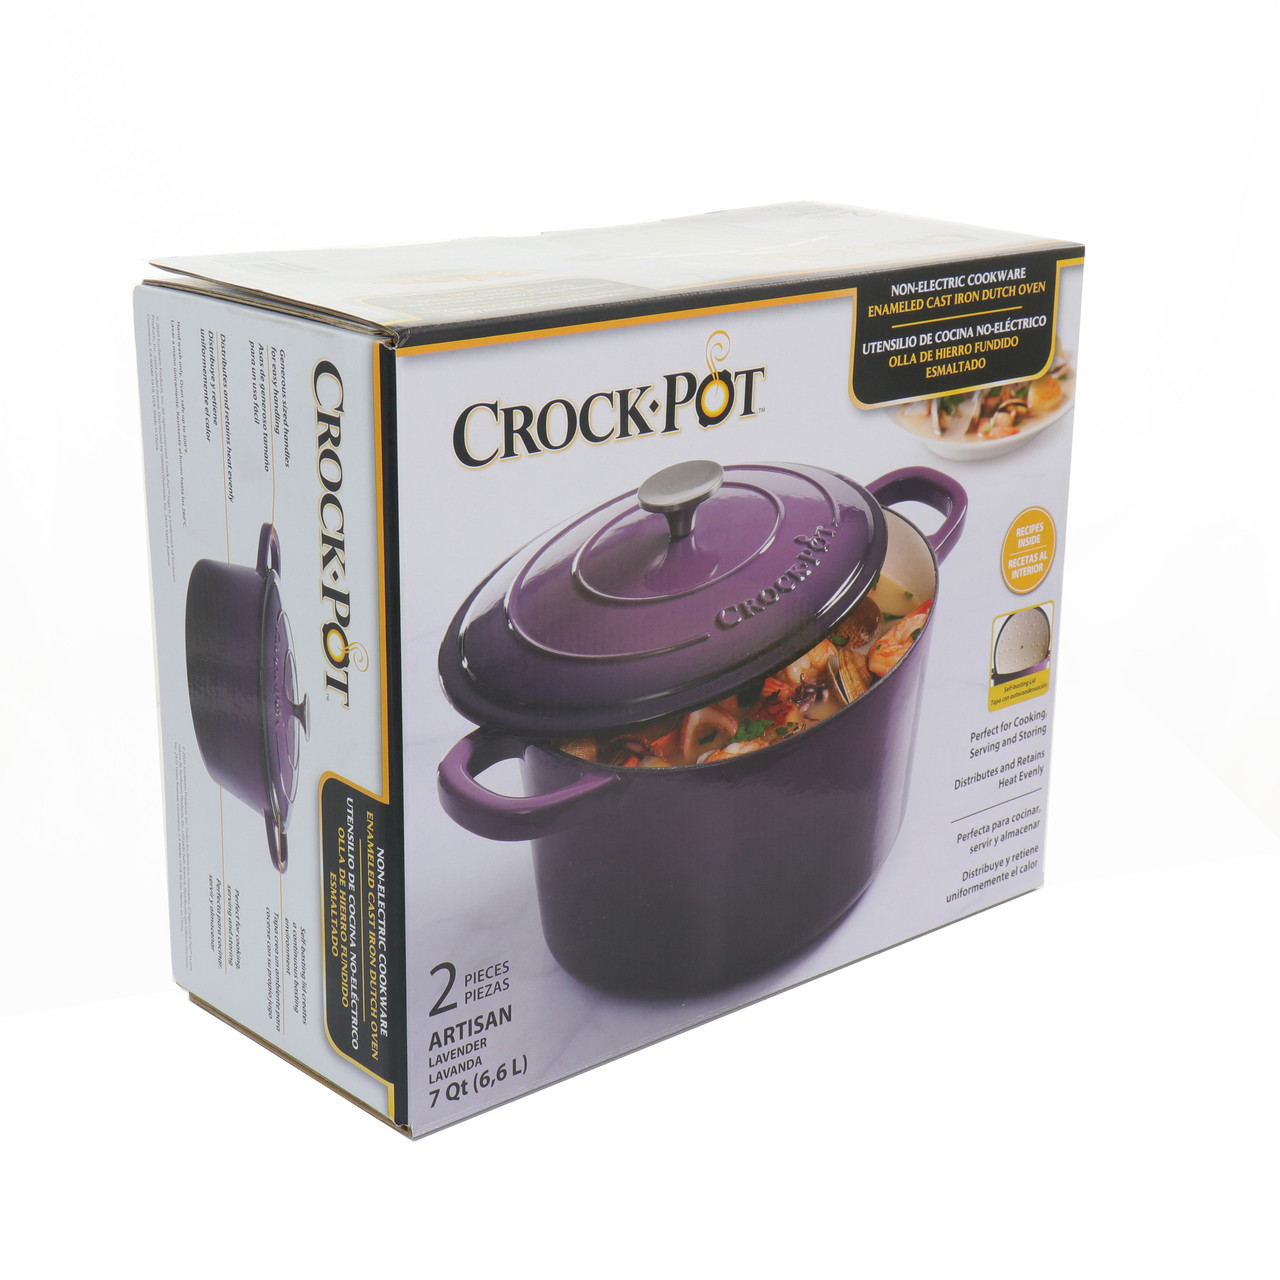 Crock-Pot Crock Pot Artisan 7 Quart Round Cast Iron Dutch Oven in